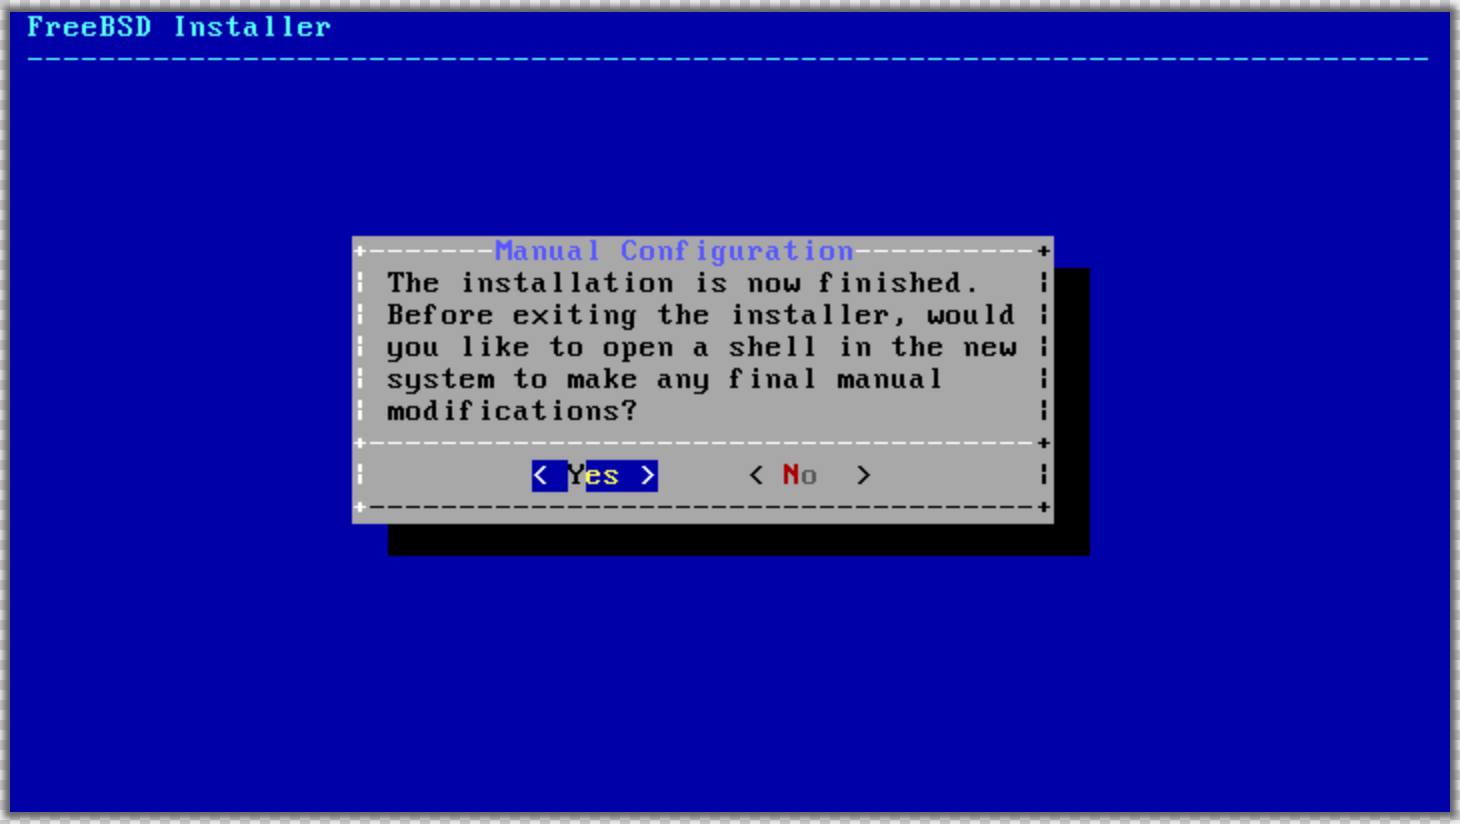 FreeBSD Manual Configuration